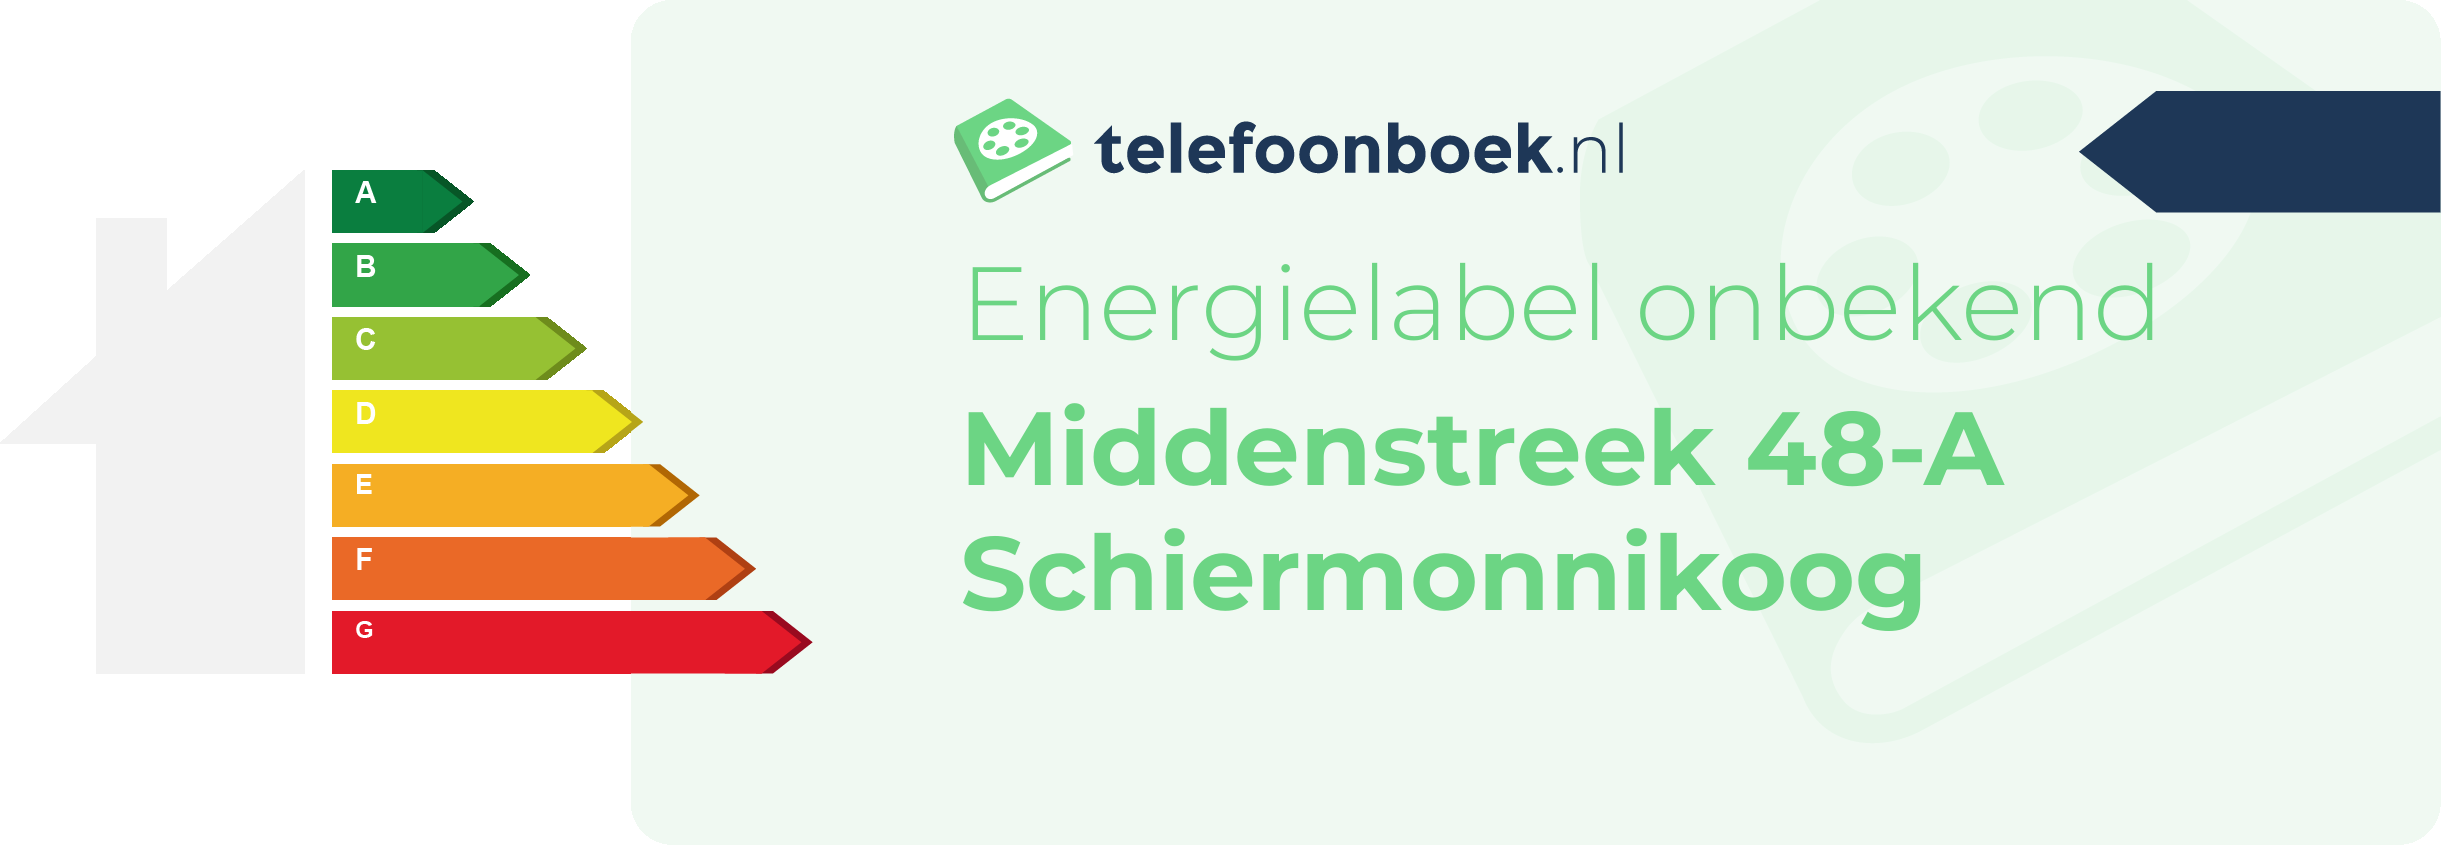 Energielabel Middenstreek 48-A Schiermonnikoog